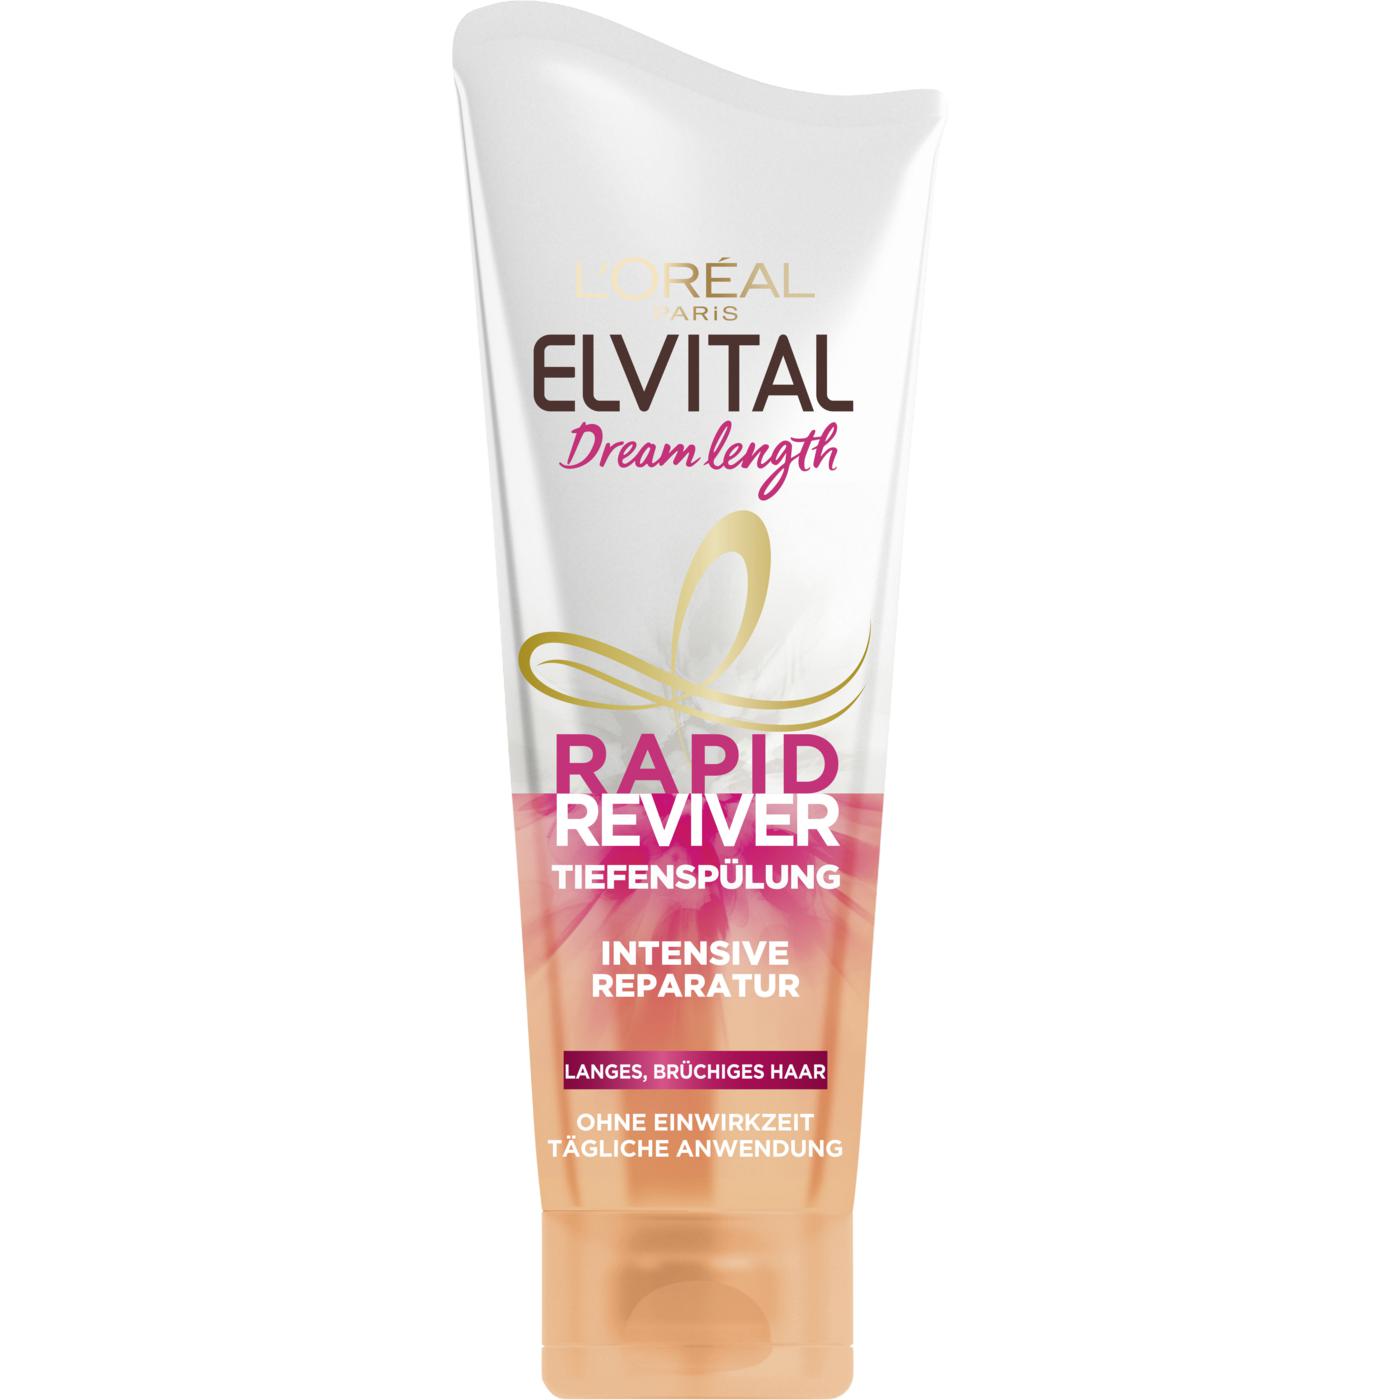 loreal elseve rapid reviver szampon